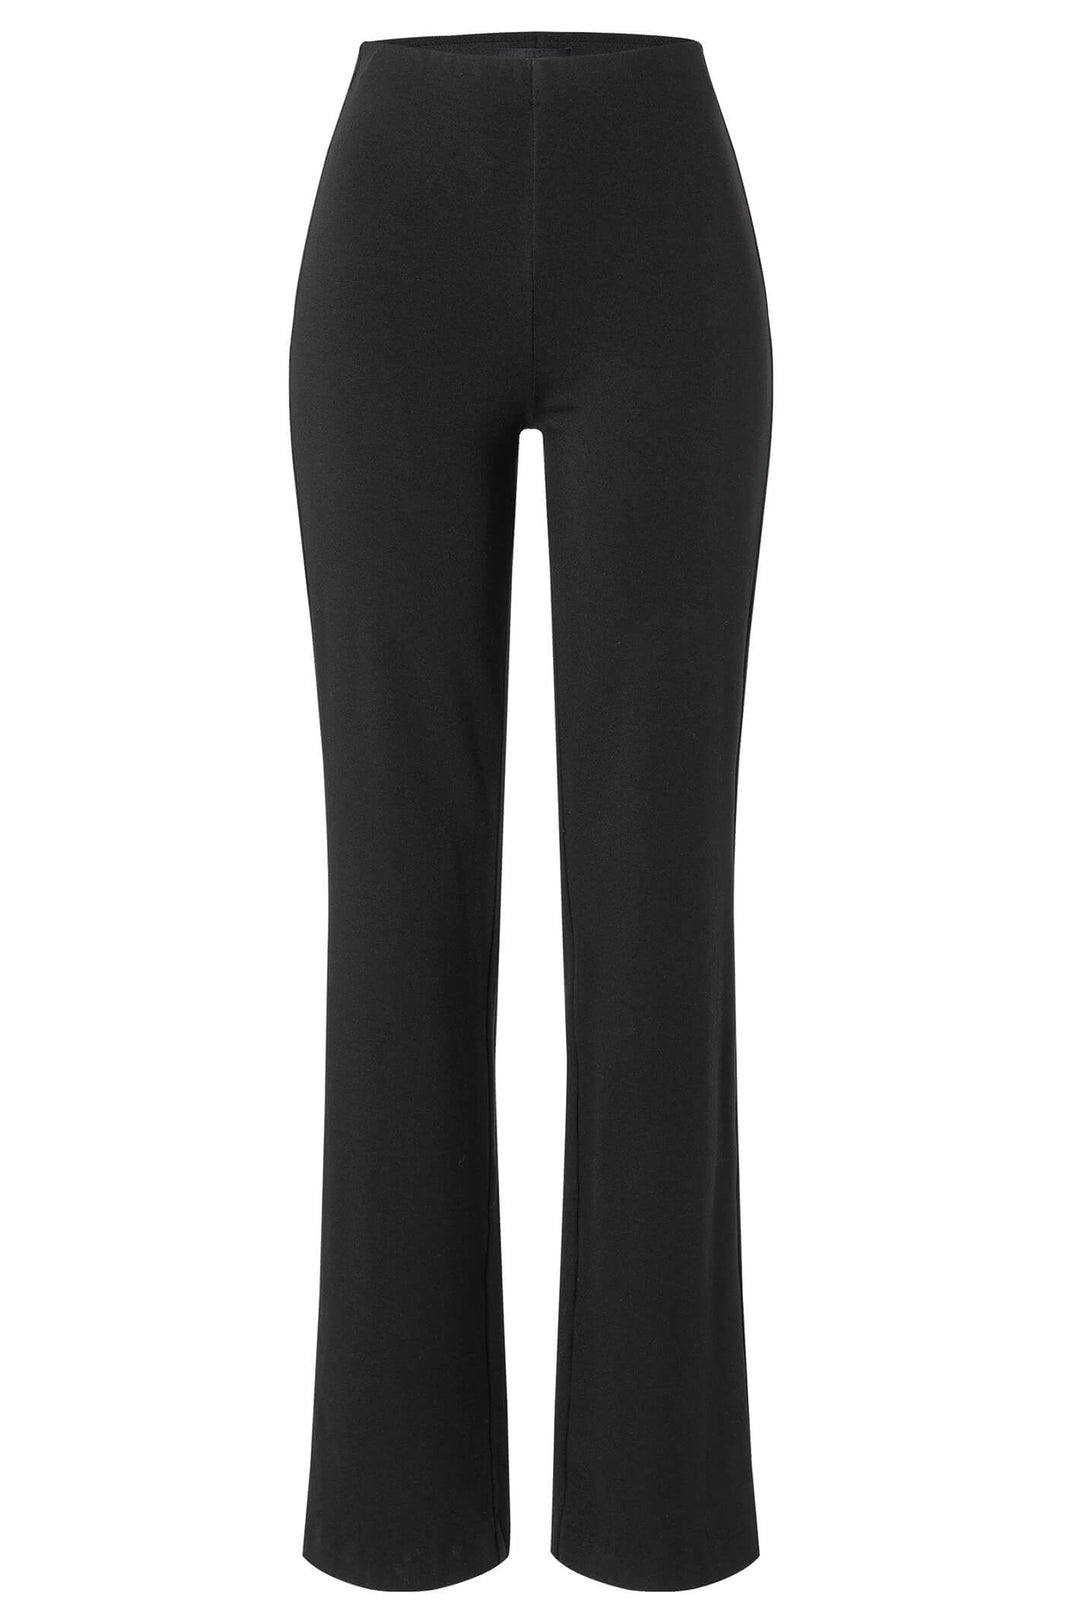 Mac 5219-00-0107L Flare Black Jeans 30 Inches - Olivia Grace Fashion